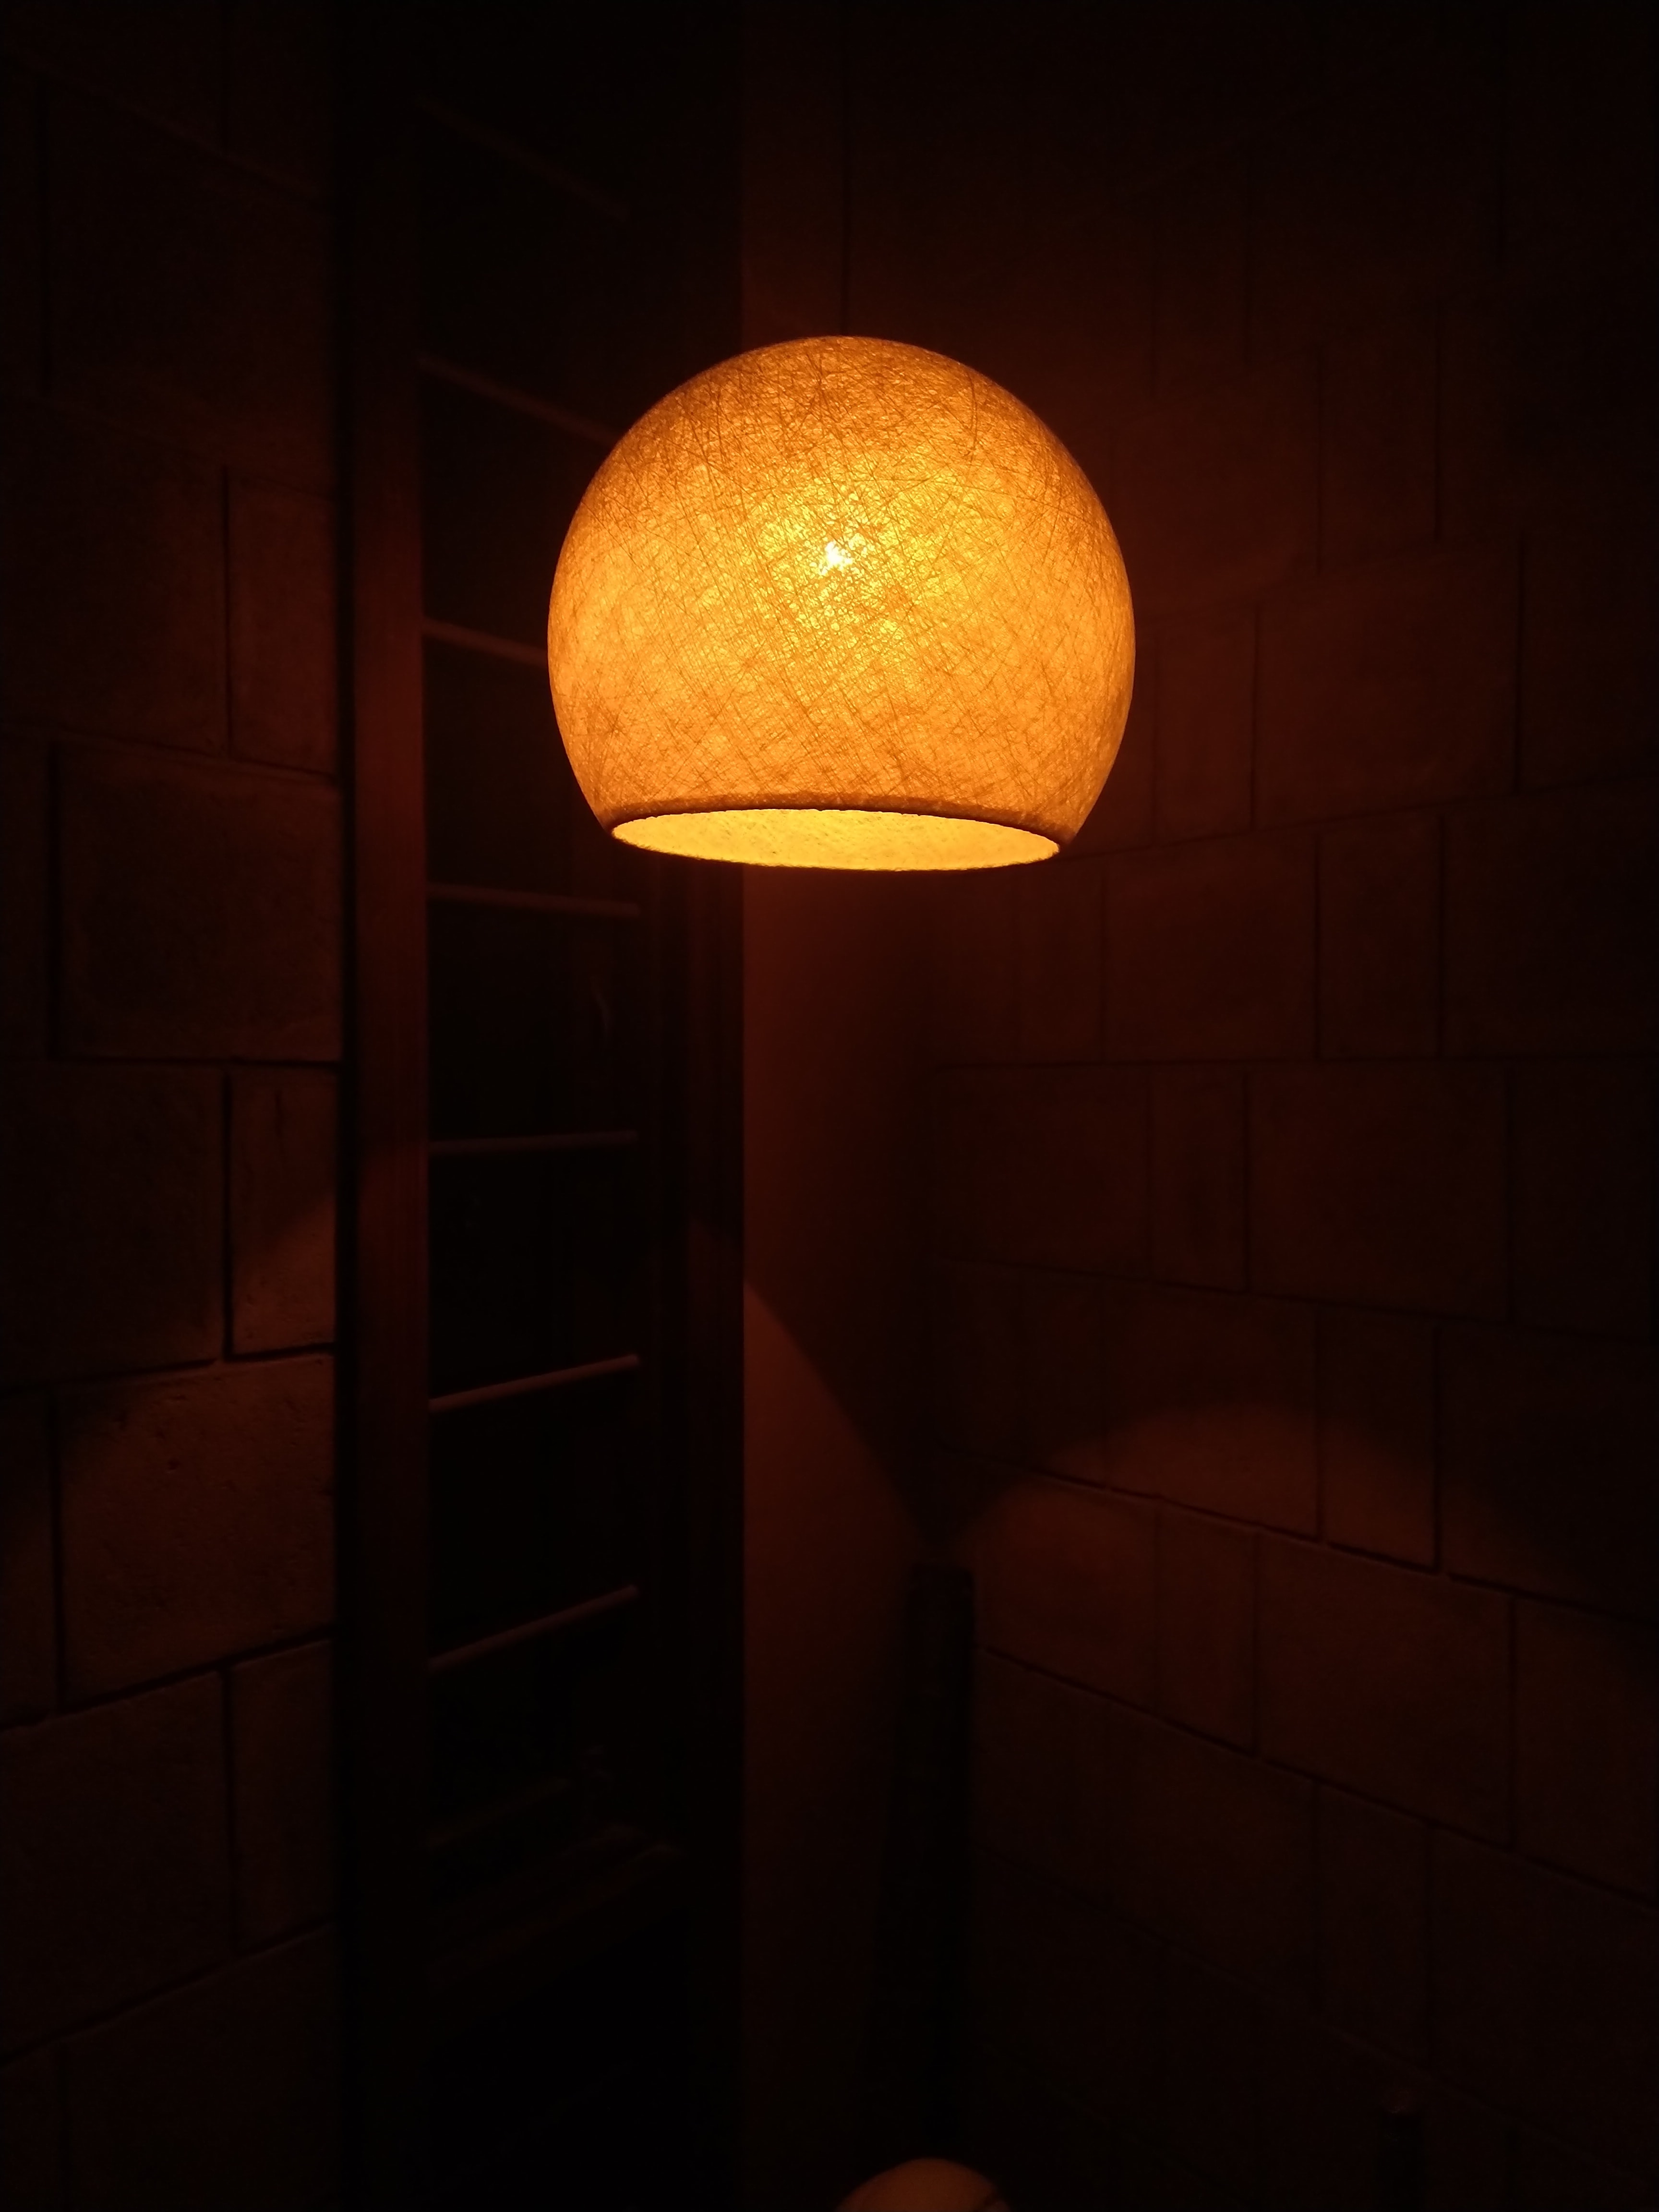 Interbond lamp shade